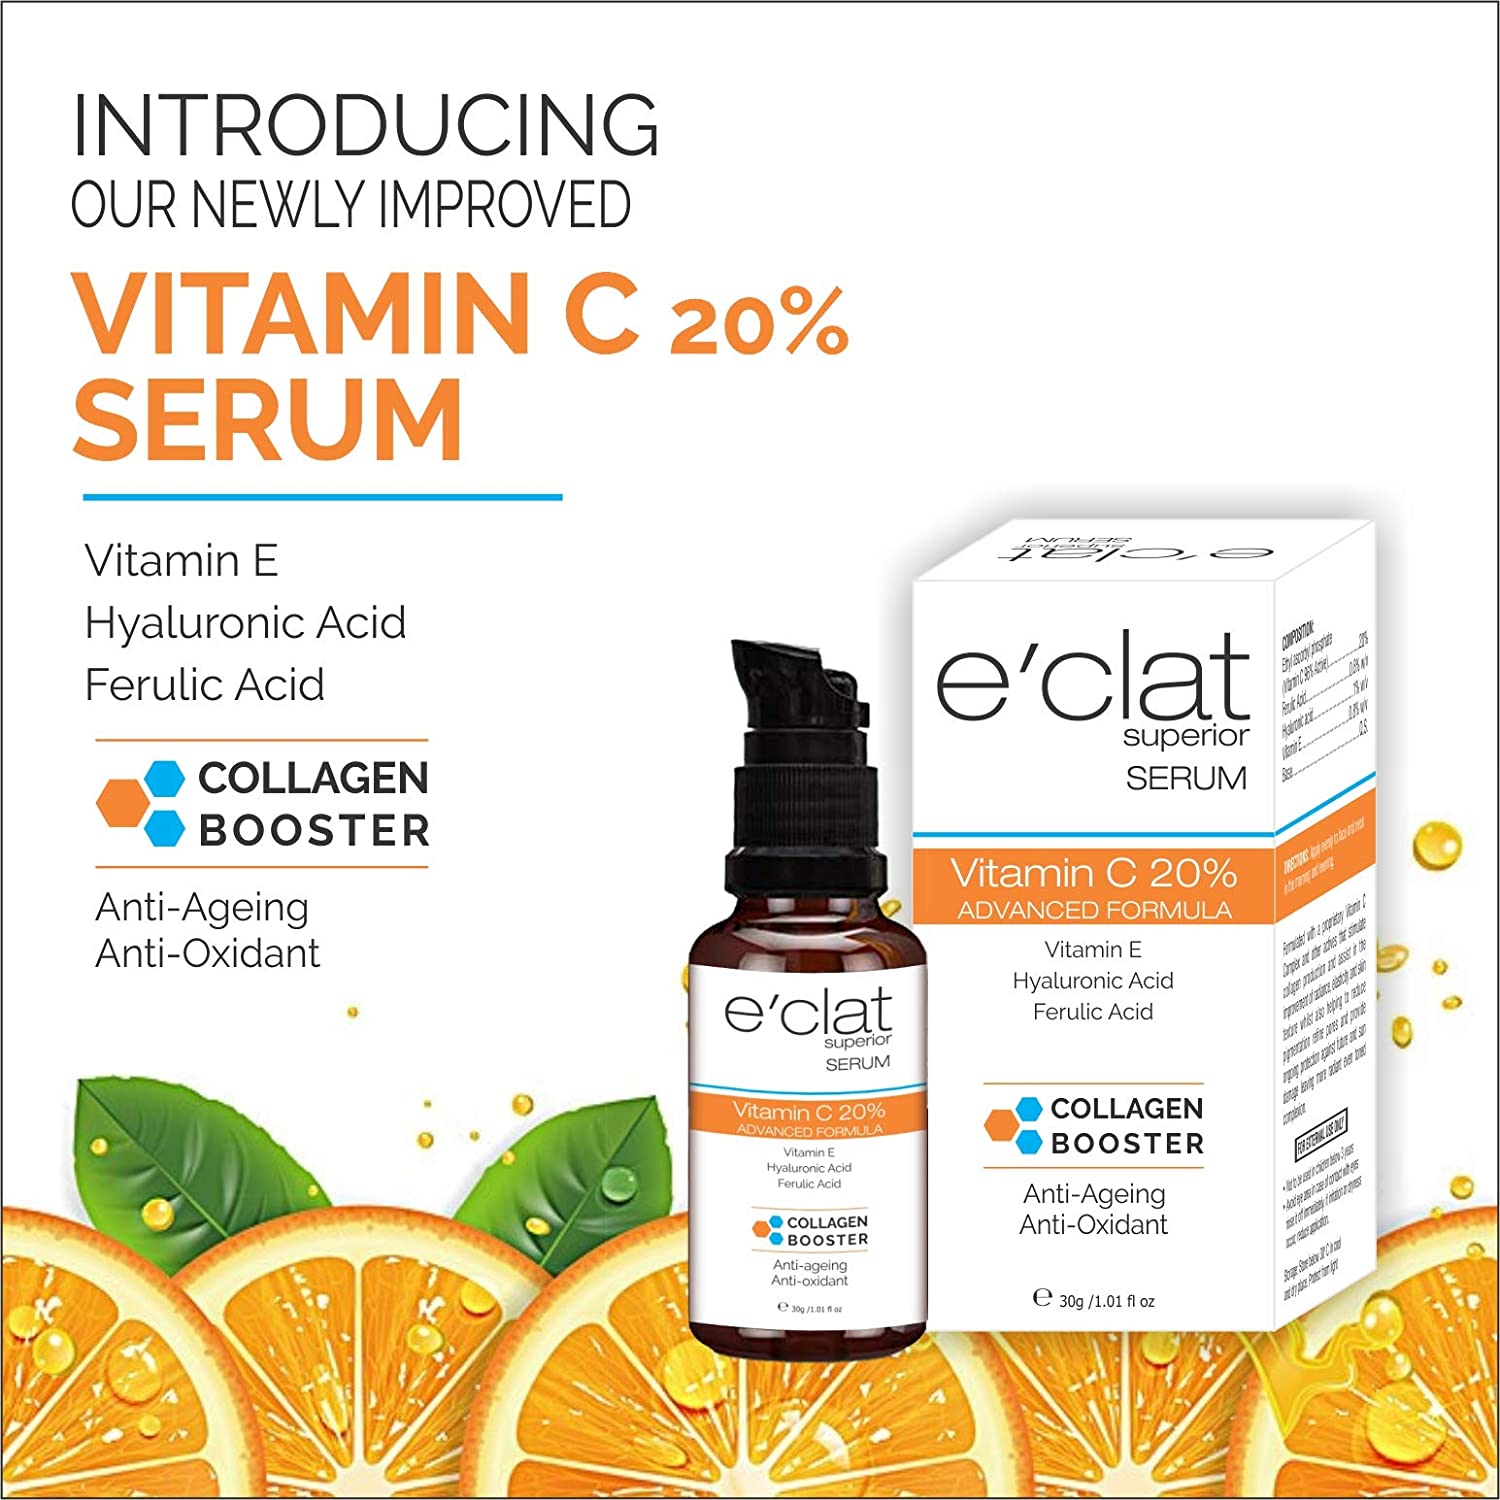 E Clat Superior Serum Vitamin C 20  Advanced Formula